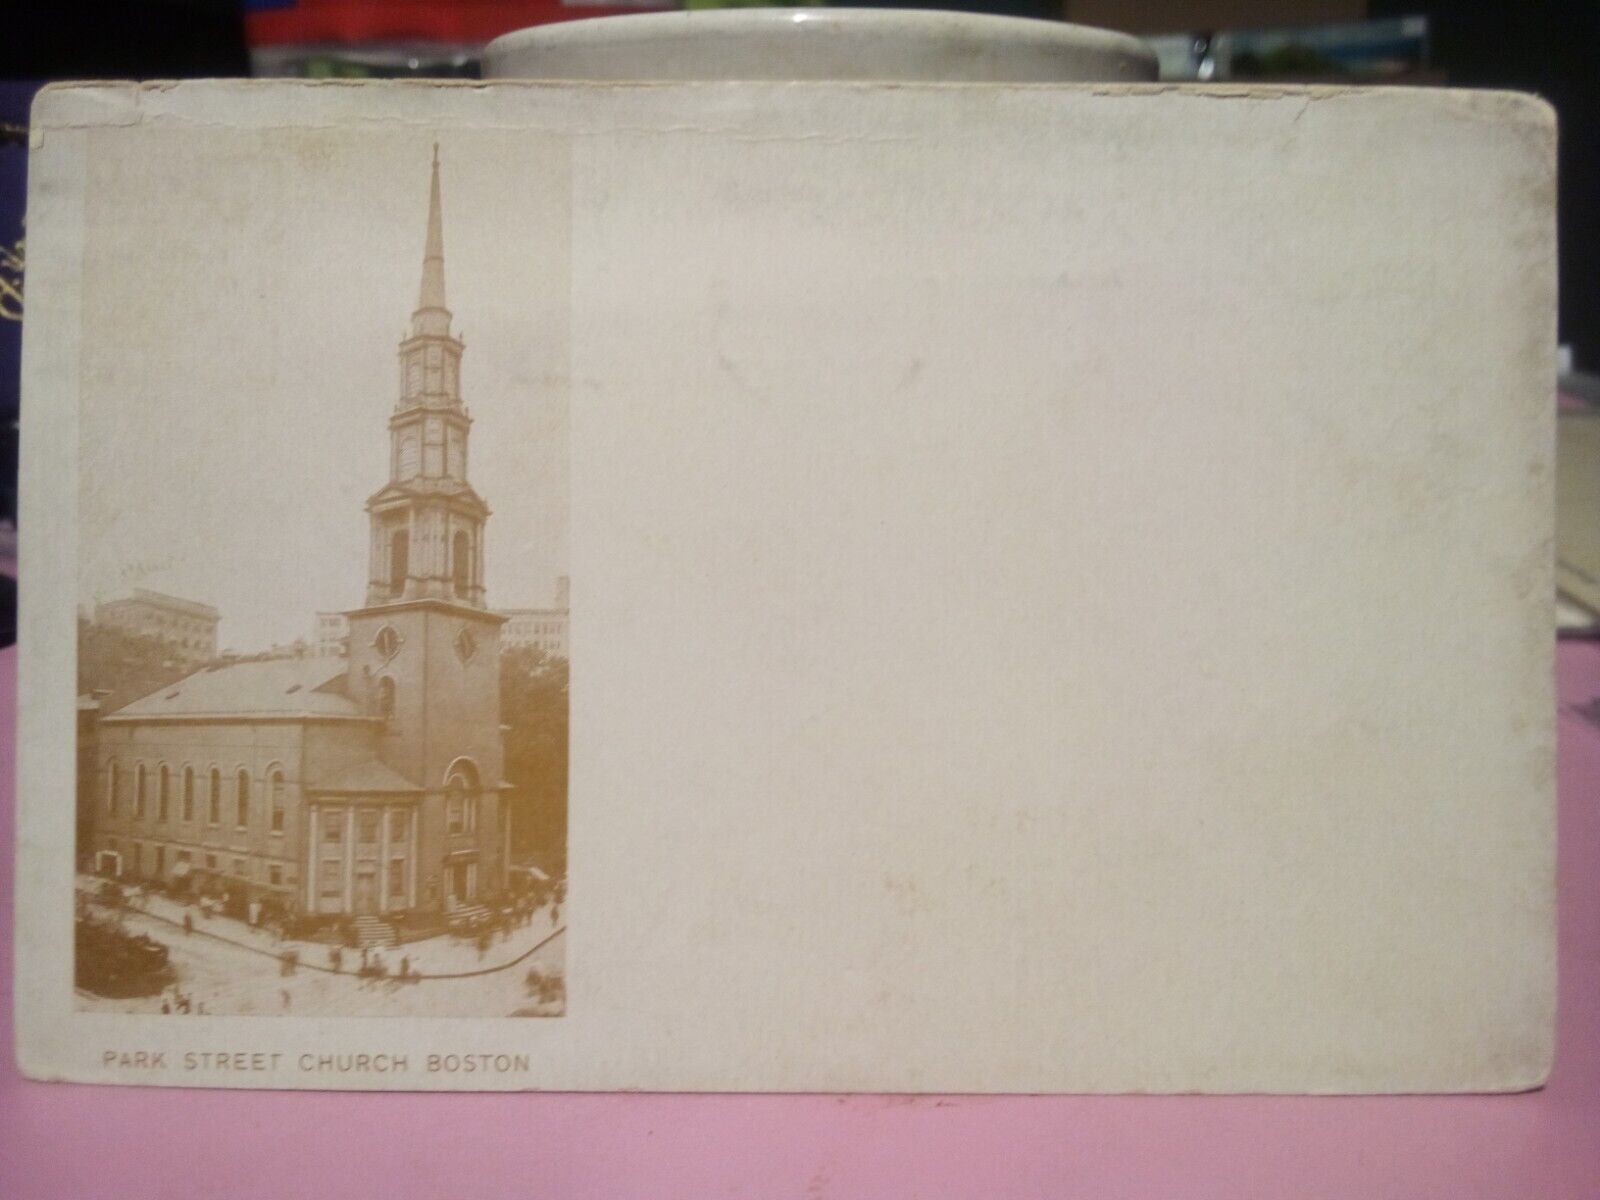 Park Street Church boston massachusetts PMC private mailing card c.1900